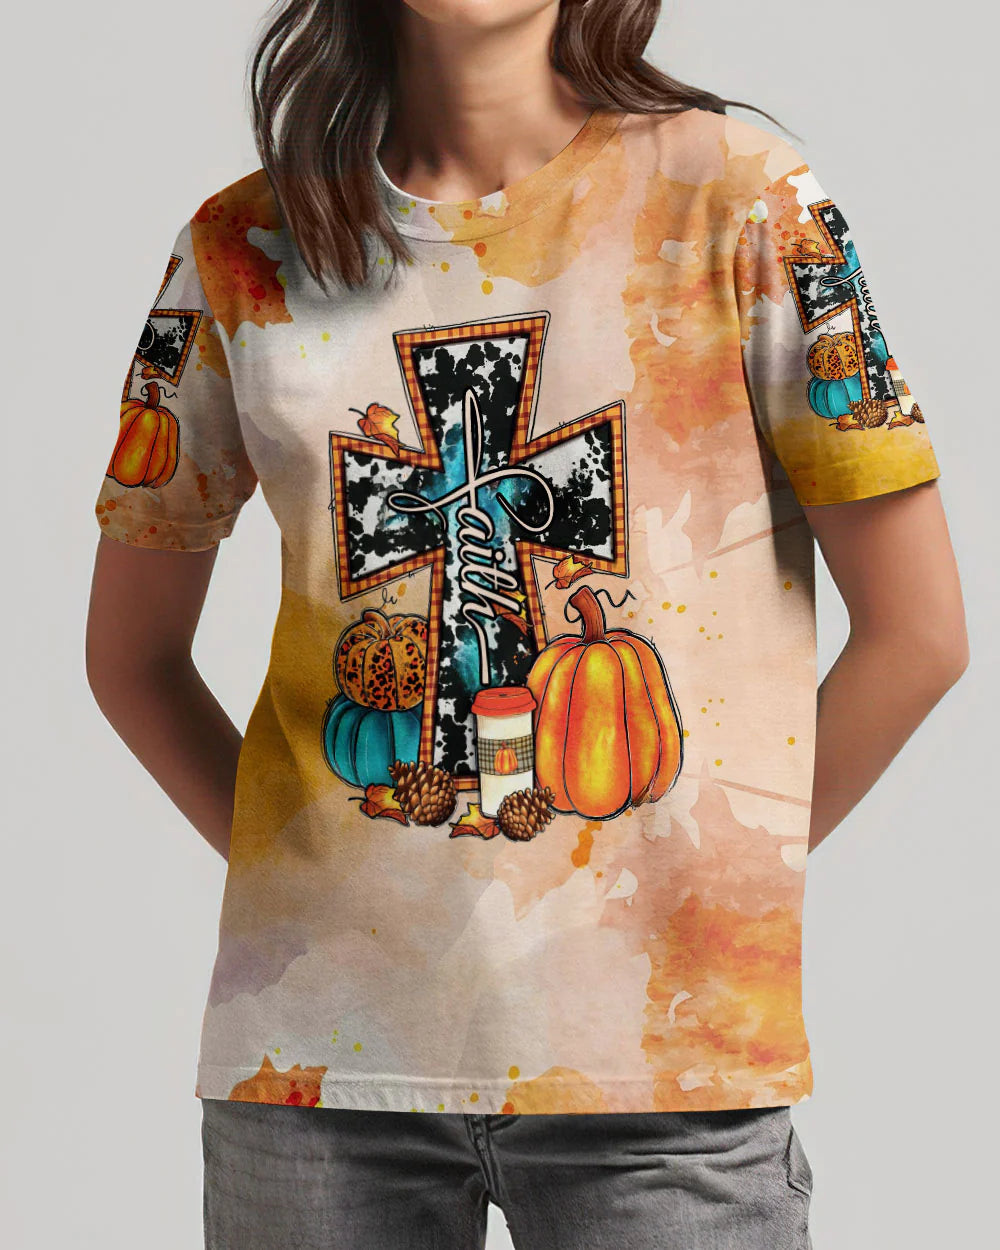 Christianartbag 3D T-Shirt For Women, Fall For Jesus Autumn, Halloween T-Shirt, Christian Shirt, Faithful Fashion, 3D Printed Shirts for Christian Women - Christian Art Bag